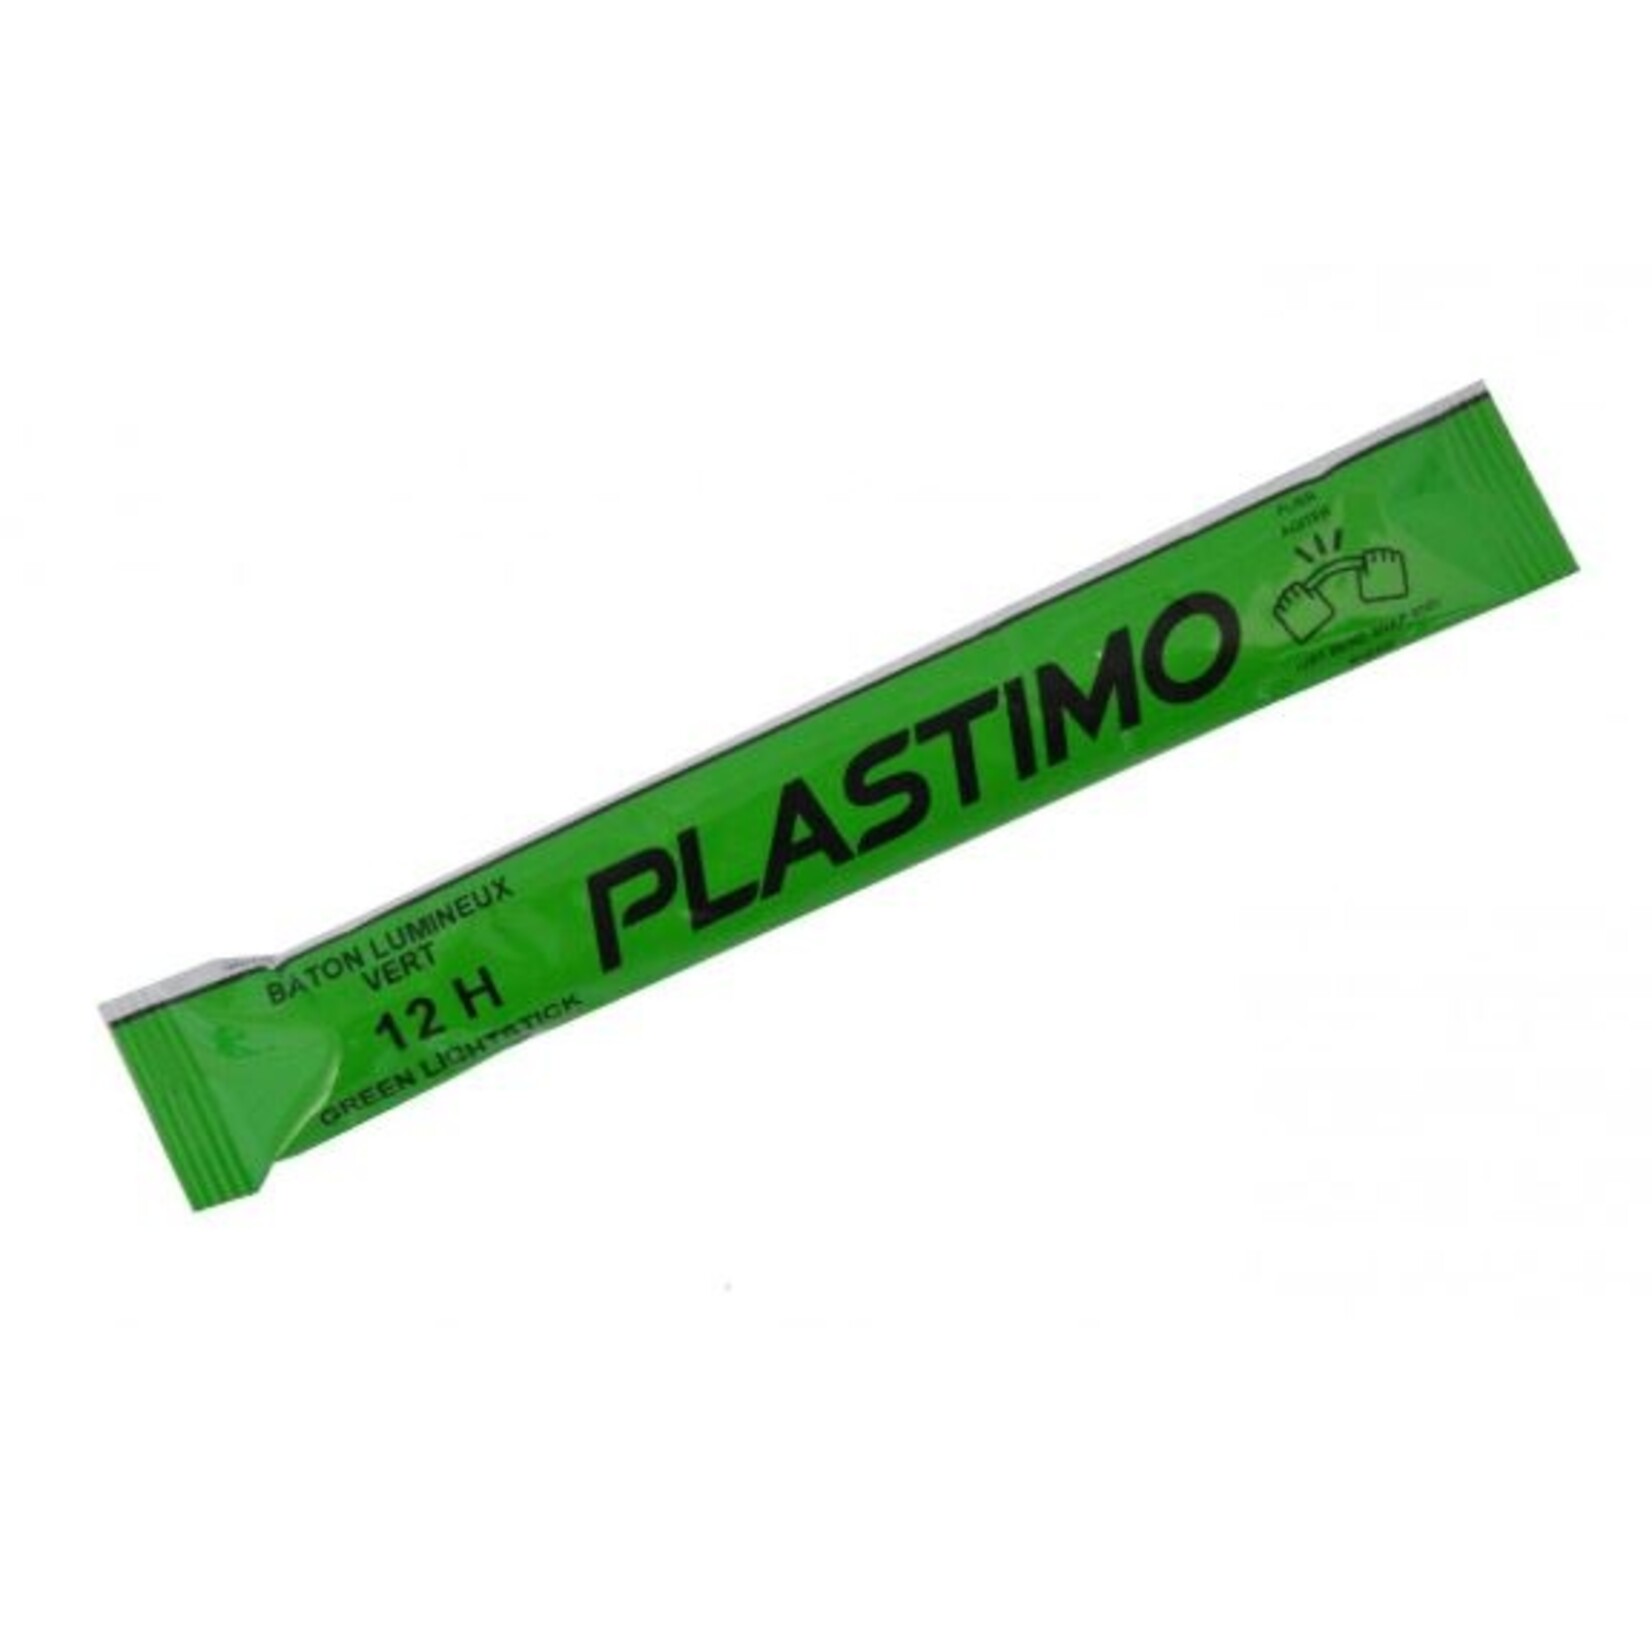 Plastimo Lightstick green 12 hours /10